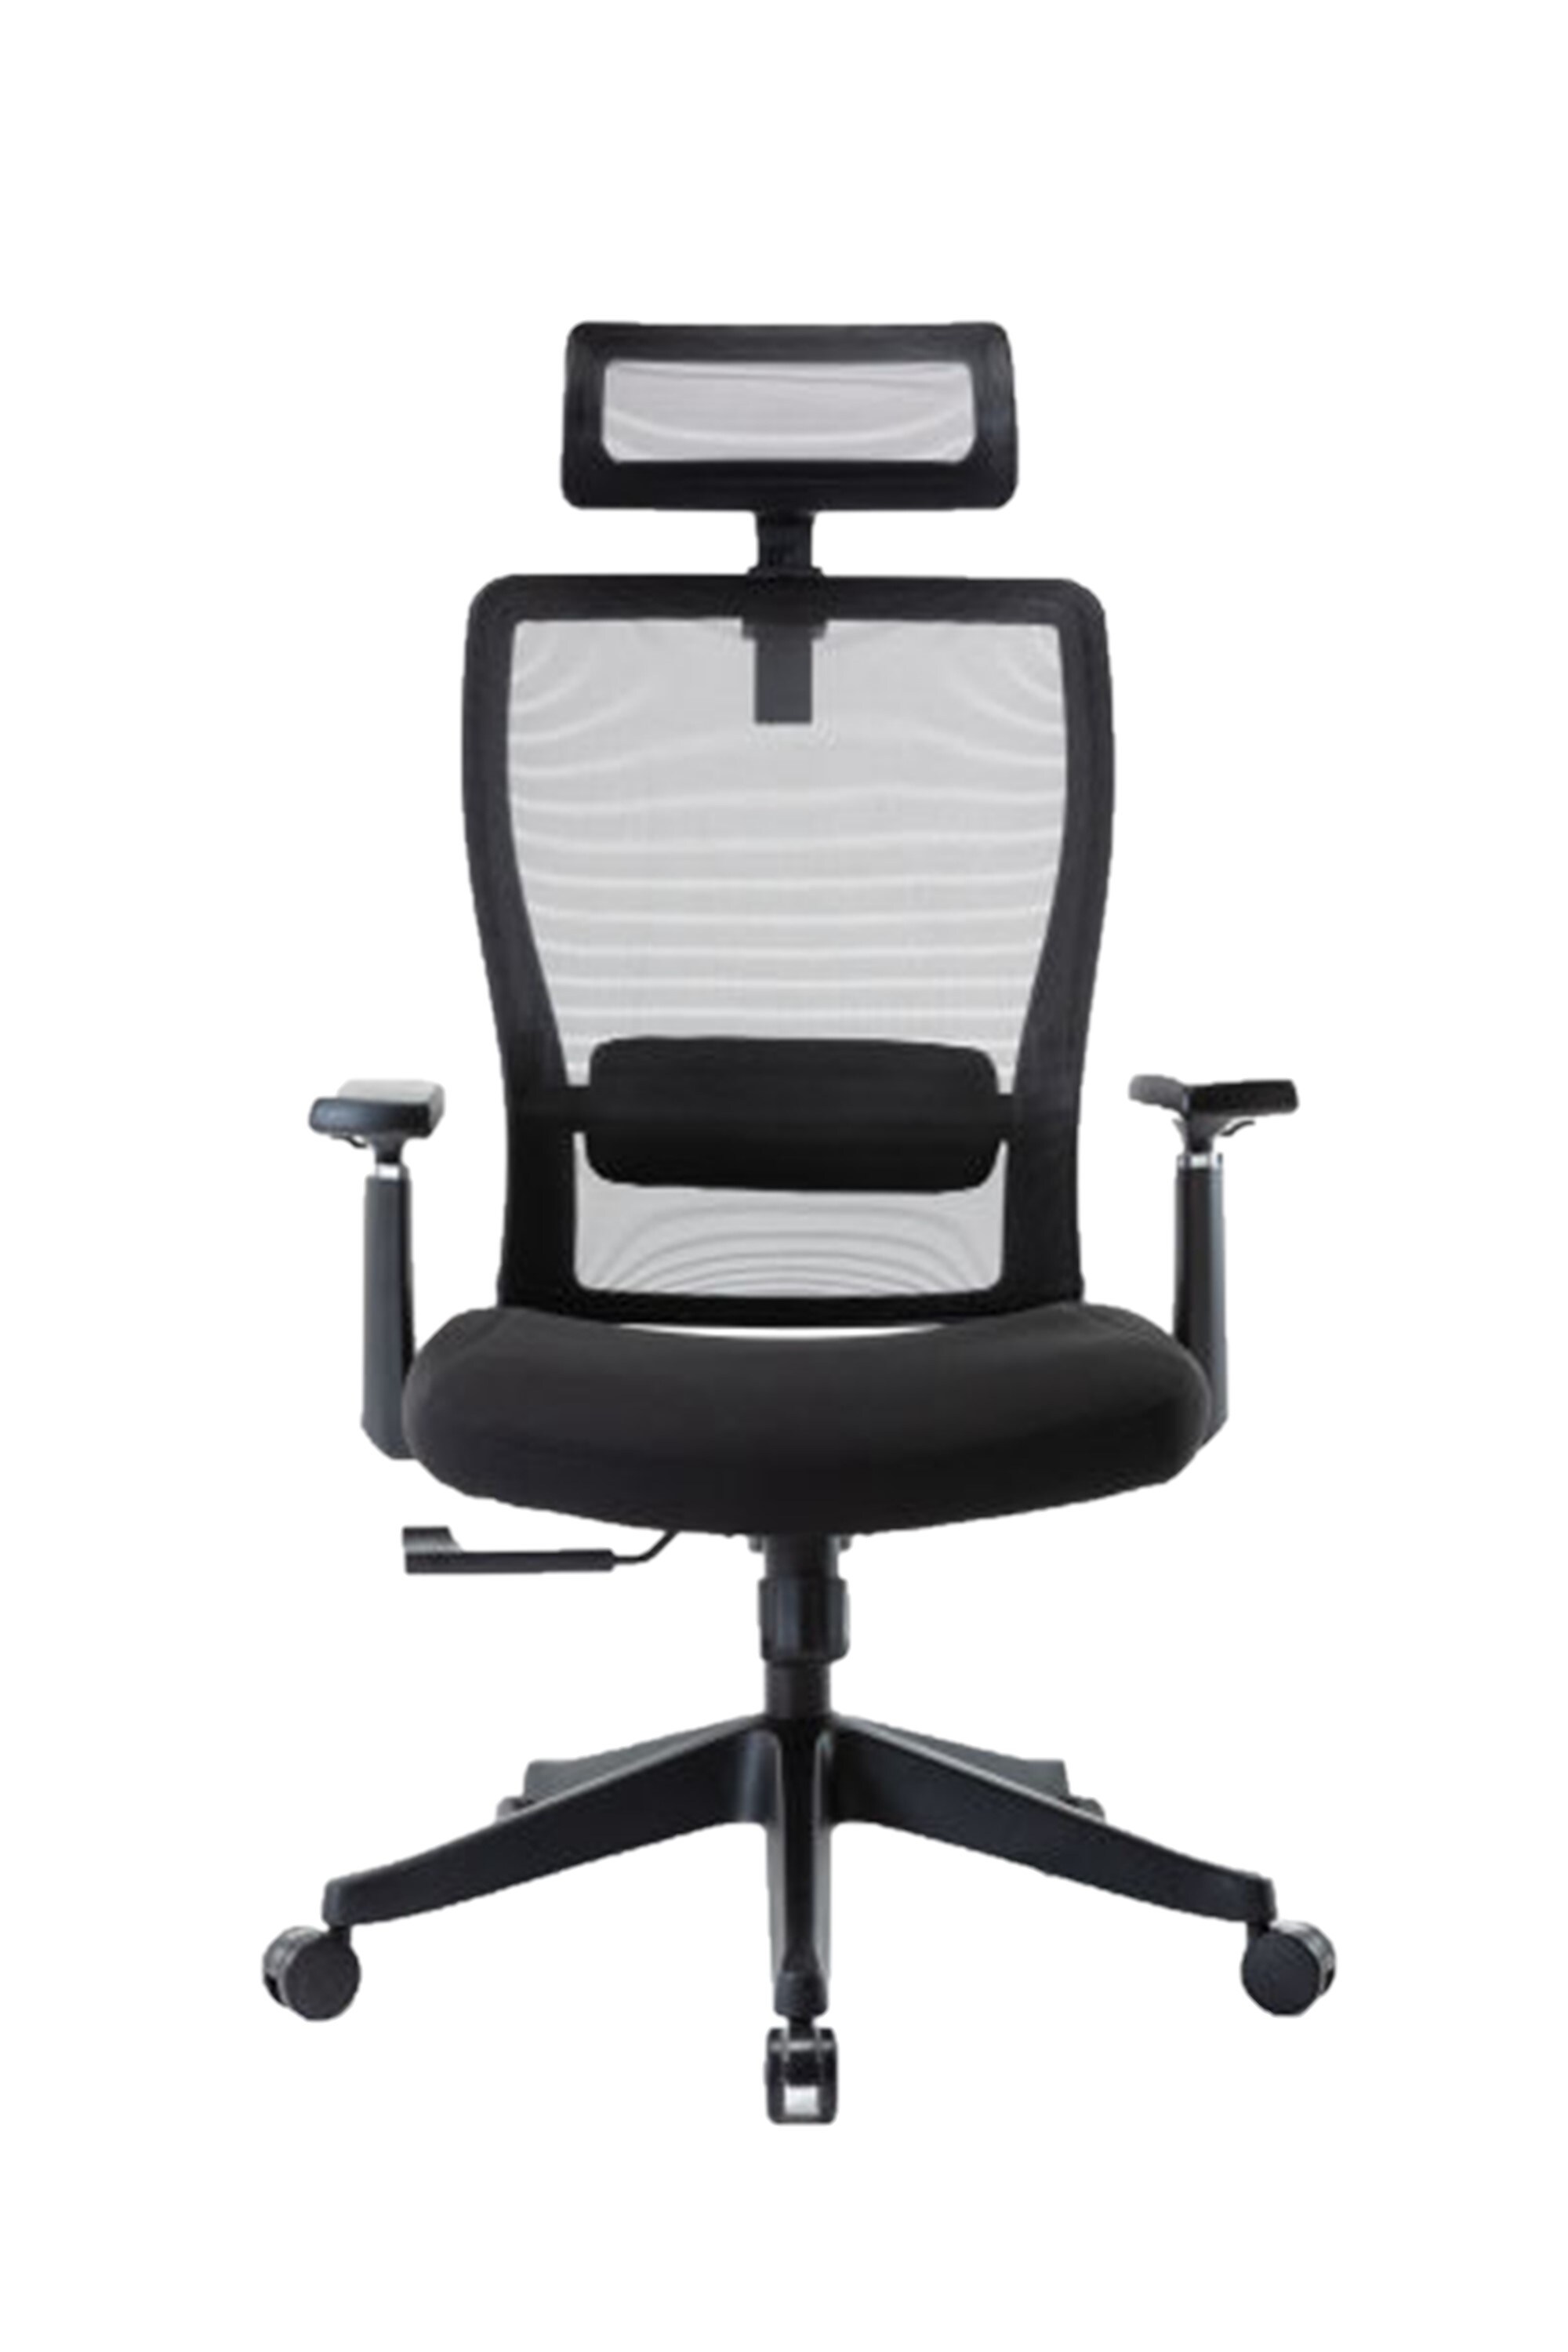 commercial office chair attachment silk headrest